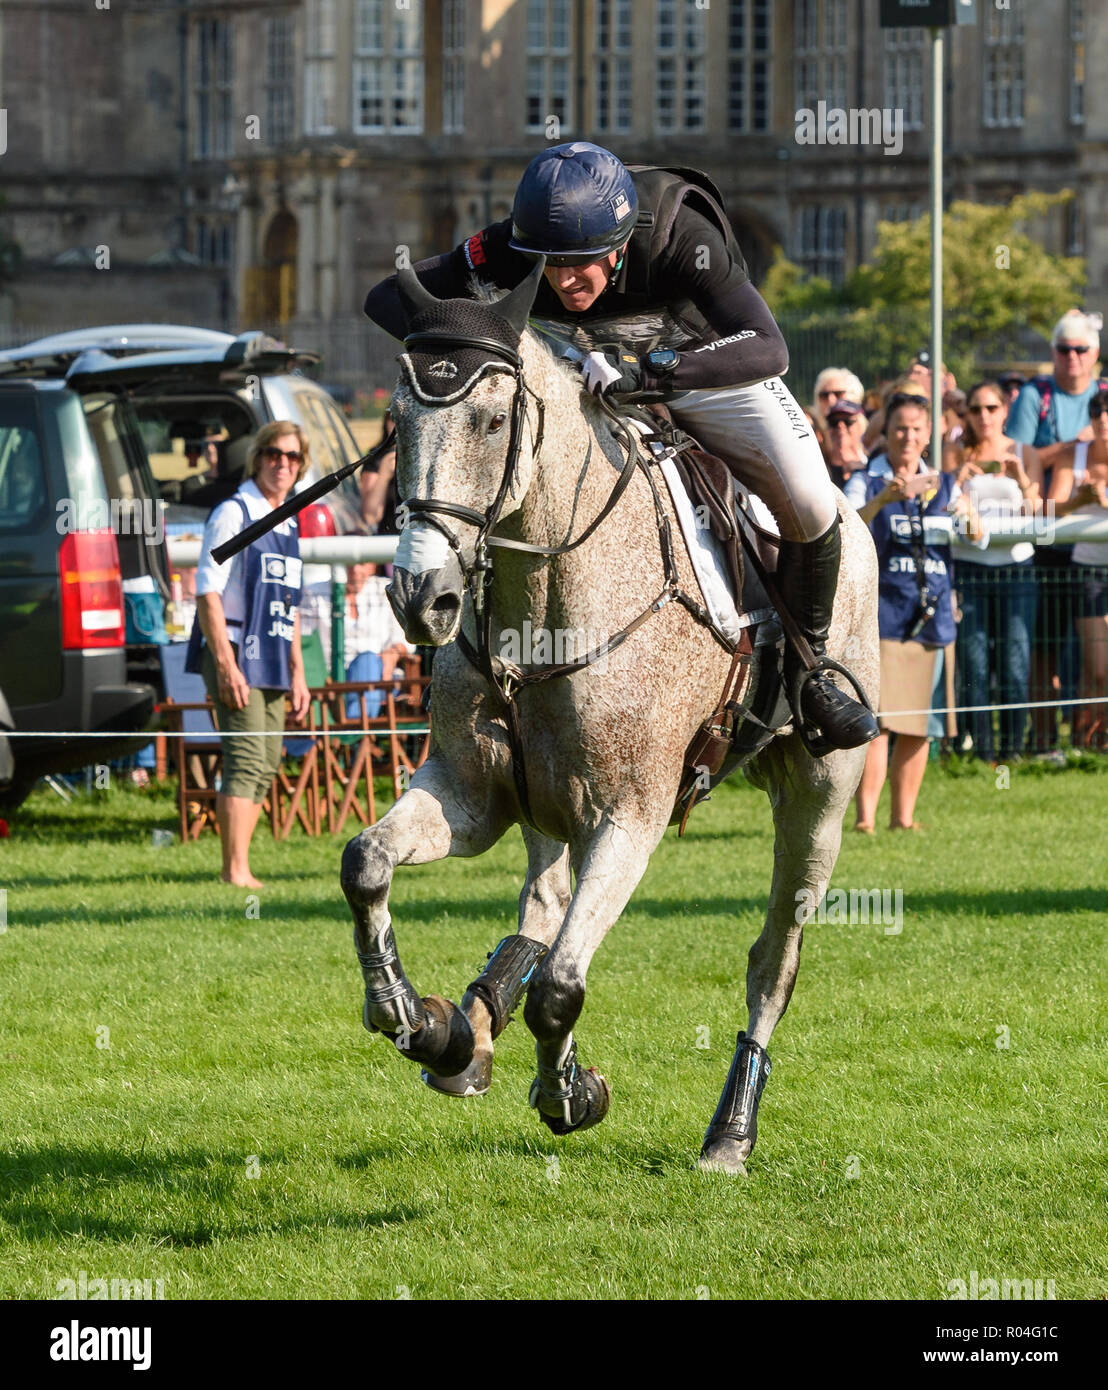 Oliver Townend y BALLAGHMOR CLASE durante la fase de cross country de la Land Rover Burghley Horse Trials 2018 Foto de stock